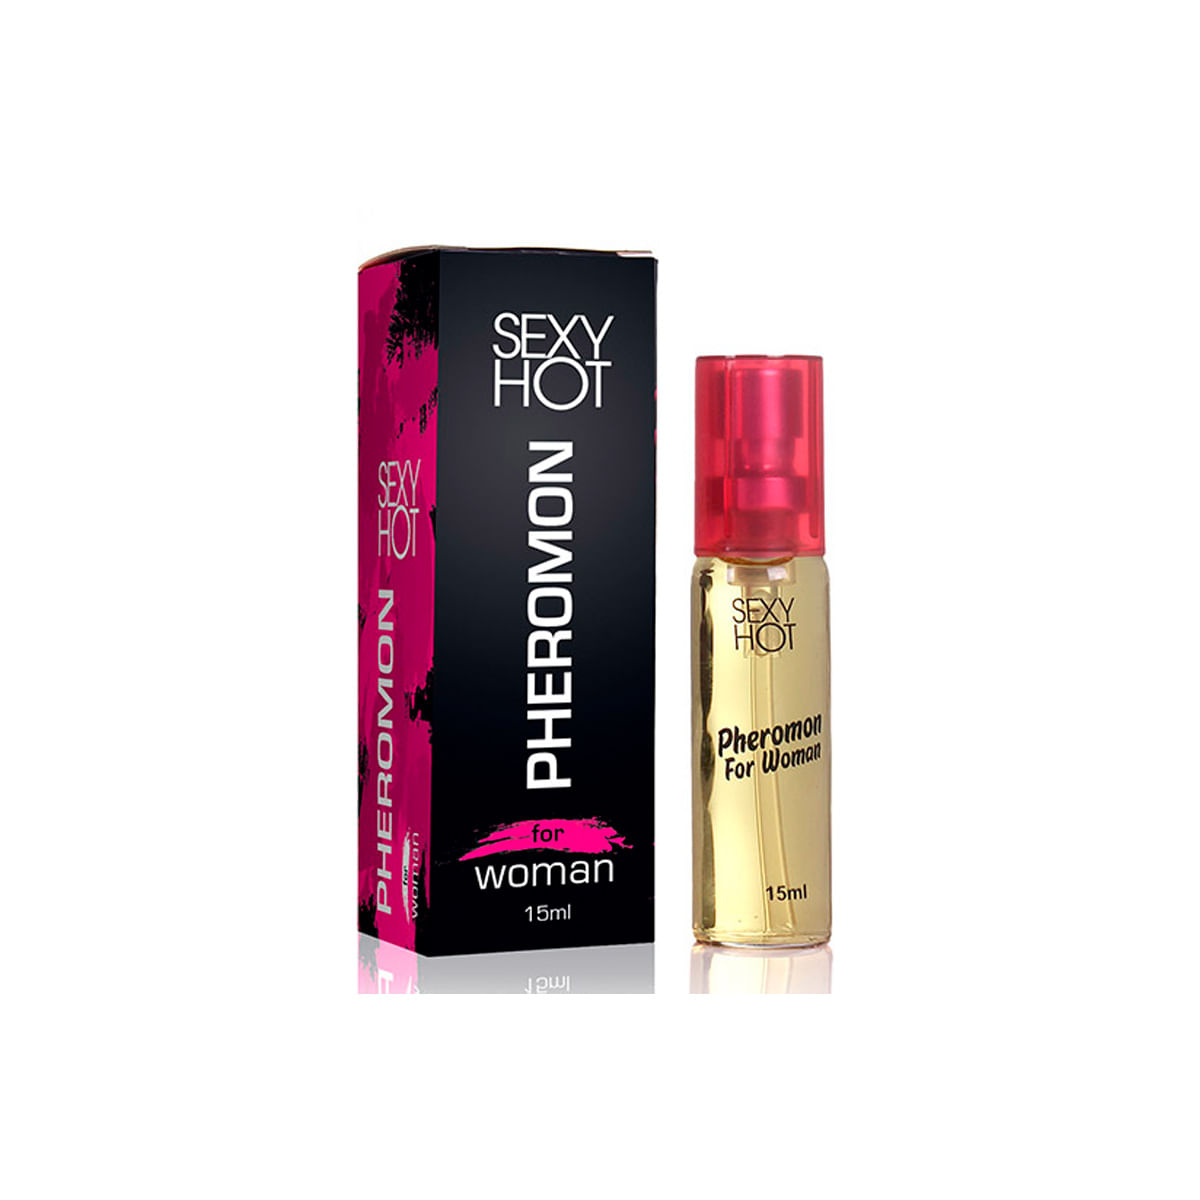 Perfume Pheromon for Woman 15ml Sexy Hot